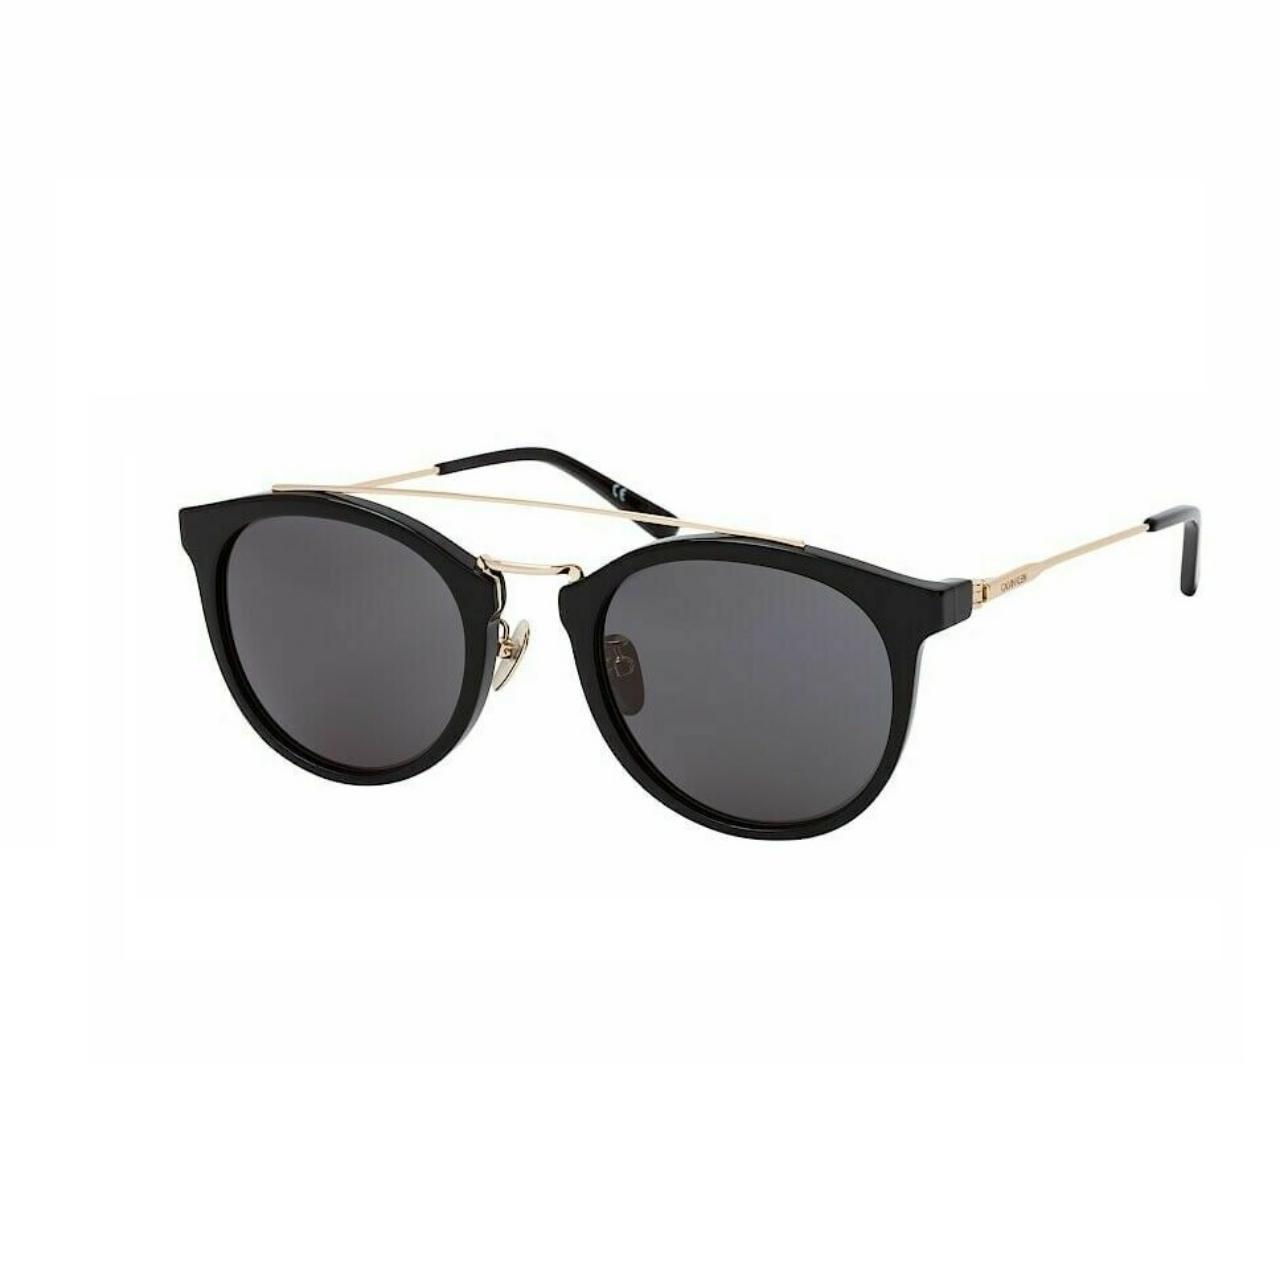 Calvin Klein Men's Black and Gold Sunglasses